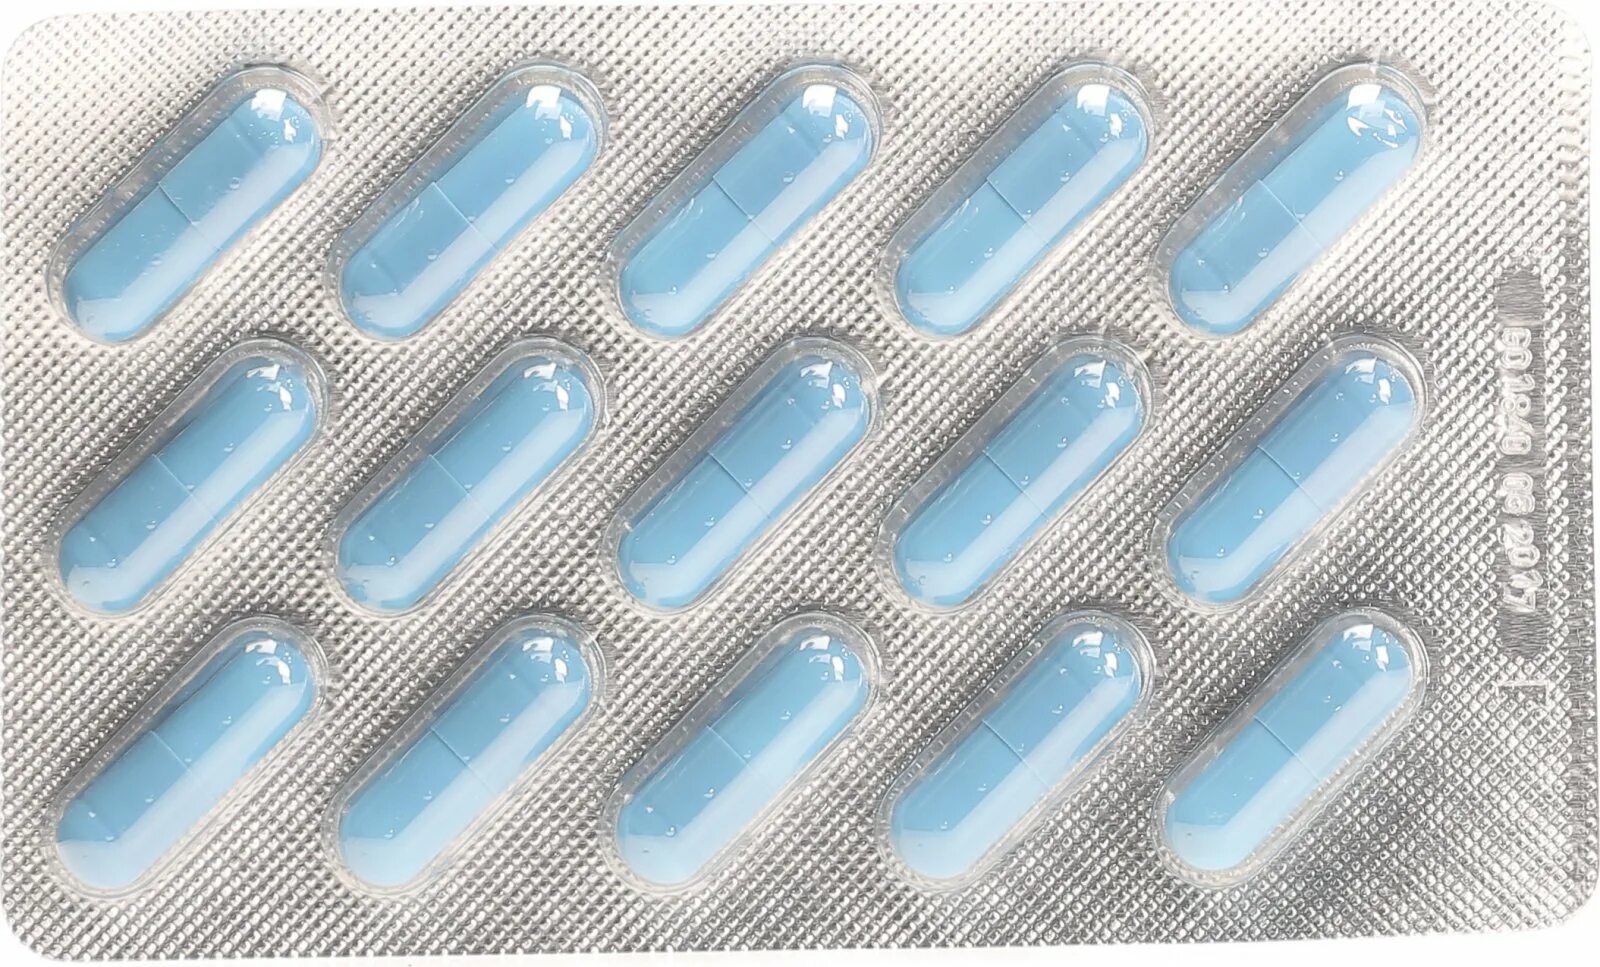 Лекарственная форма кальция. Структум капс 250мг. Синие капсулы. Капсула (лекарственная форма). Капсула 500 мг голубая.